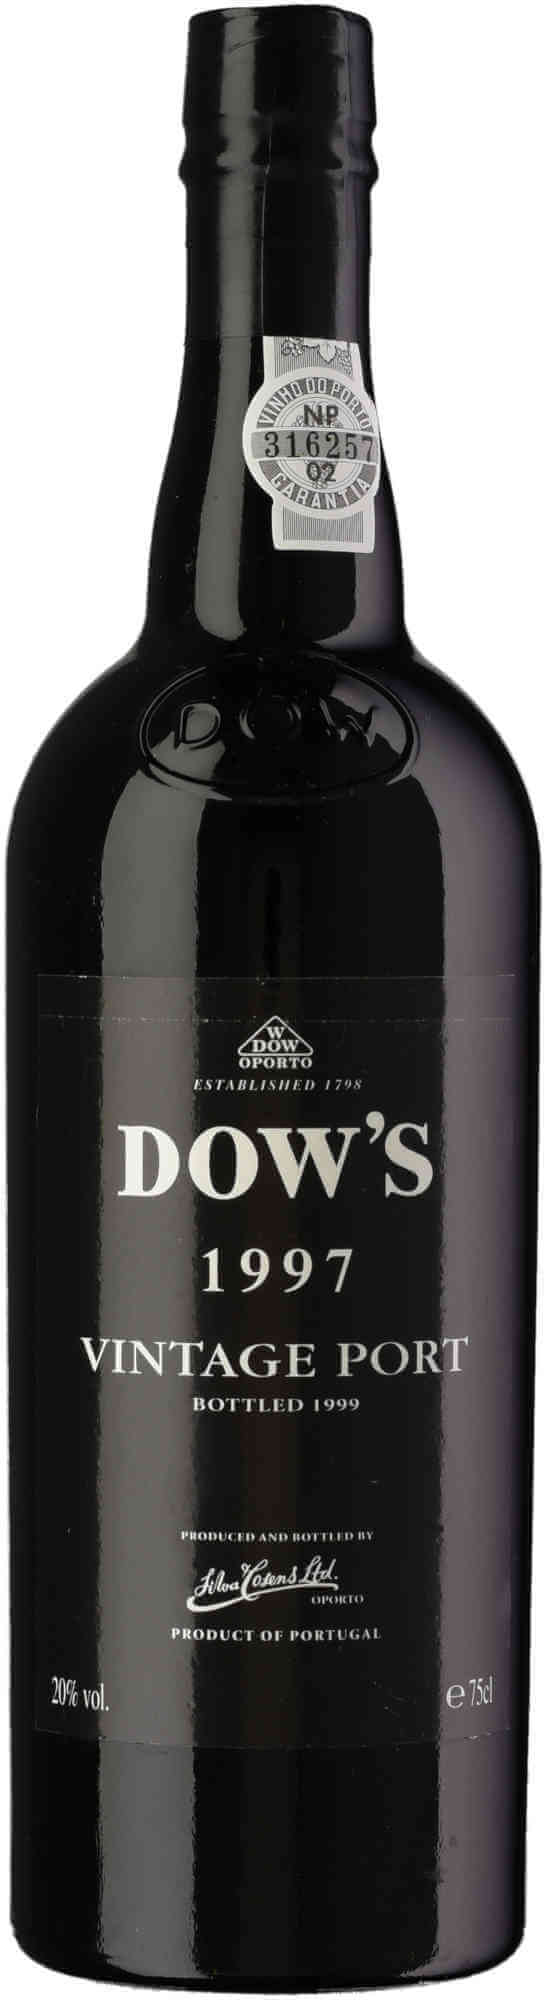 Dows-Vintage-Port-1997